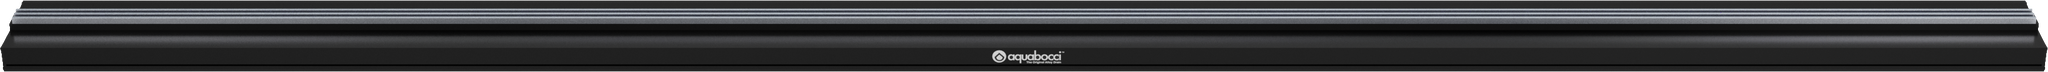 BLADE-T External Slot Drain | 2400mm / 94 Inch Length - Aquabocci Ltd